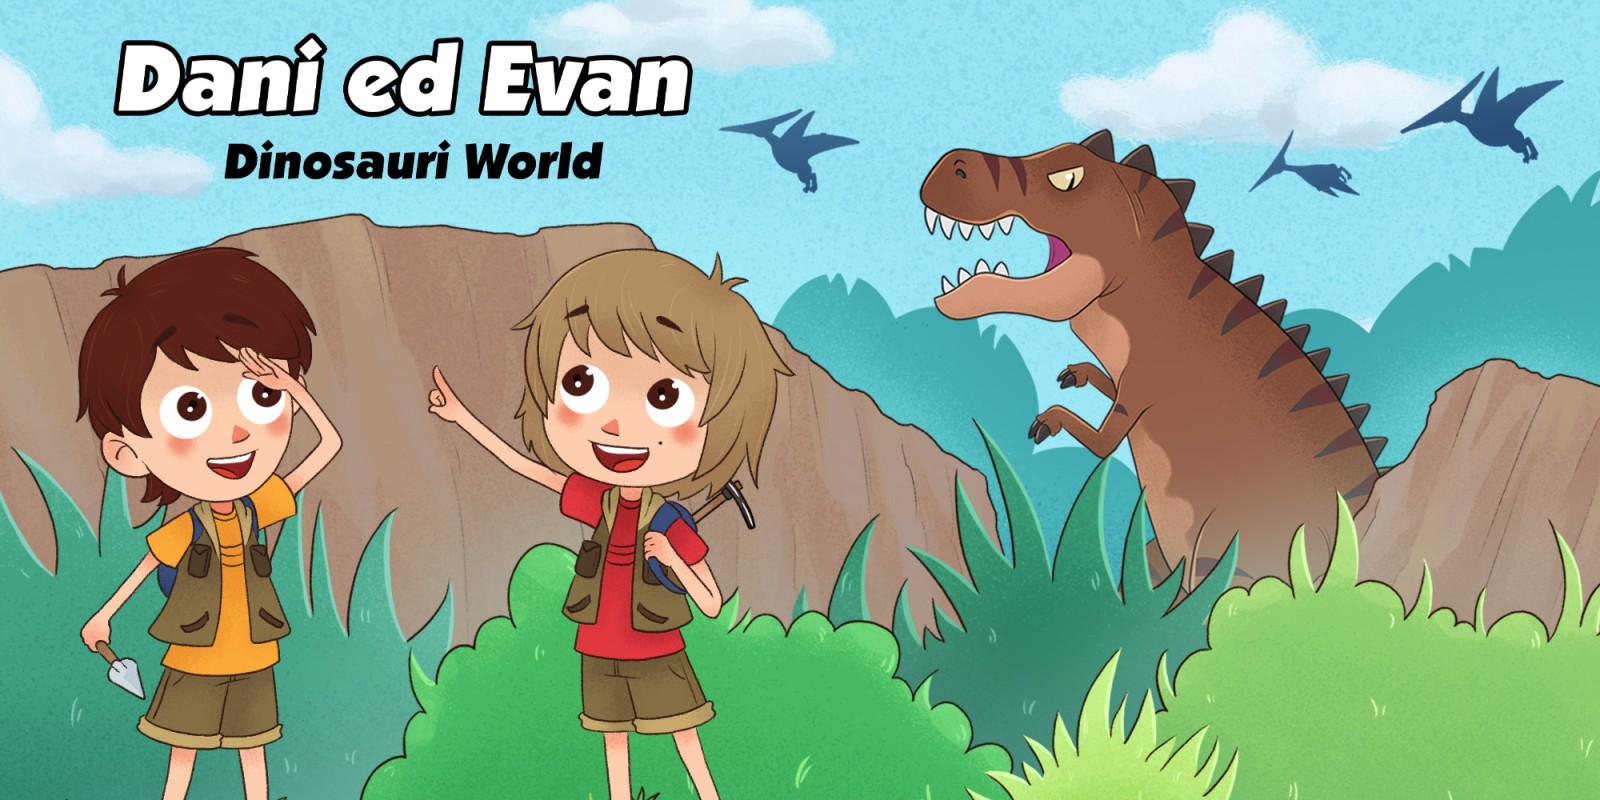 Dani ed Evan: Dinosauri World